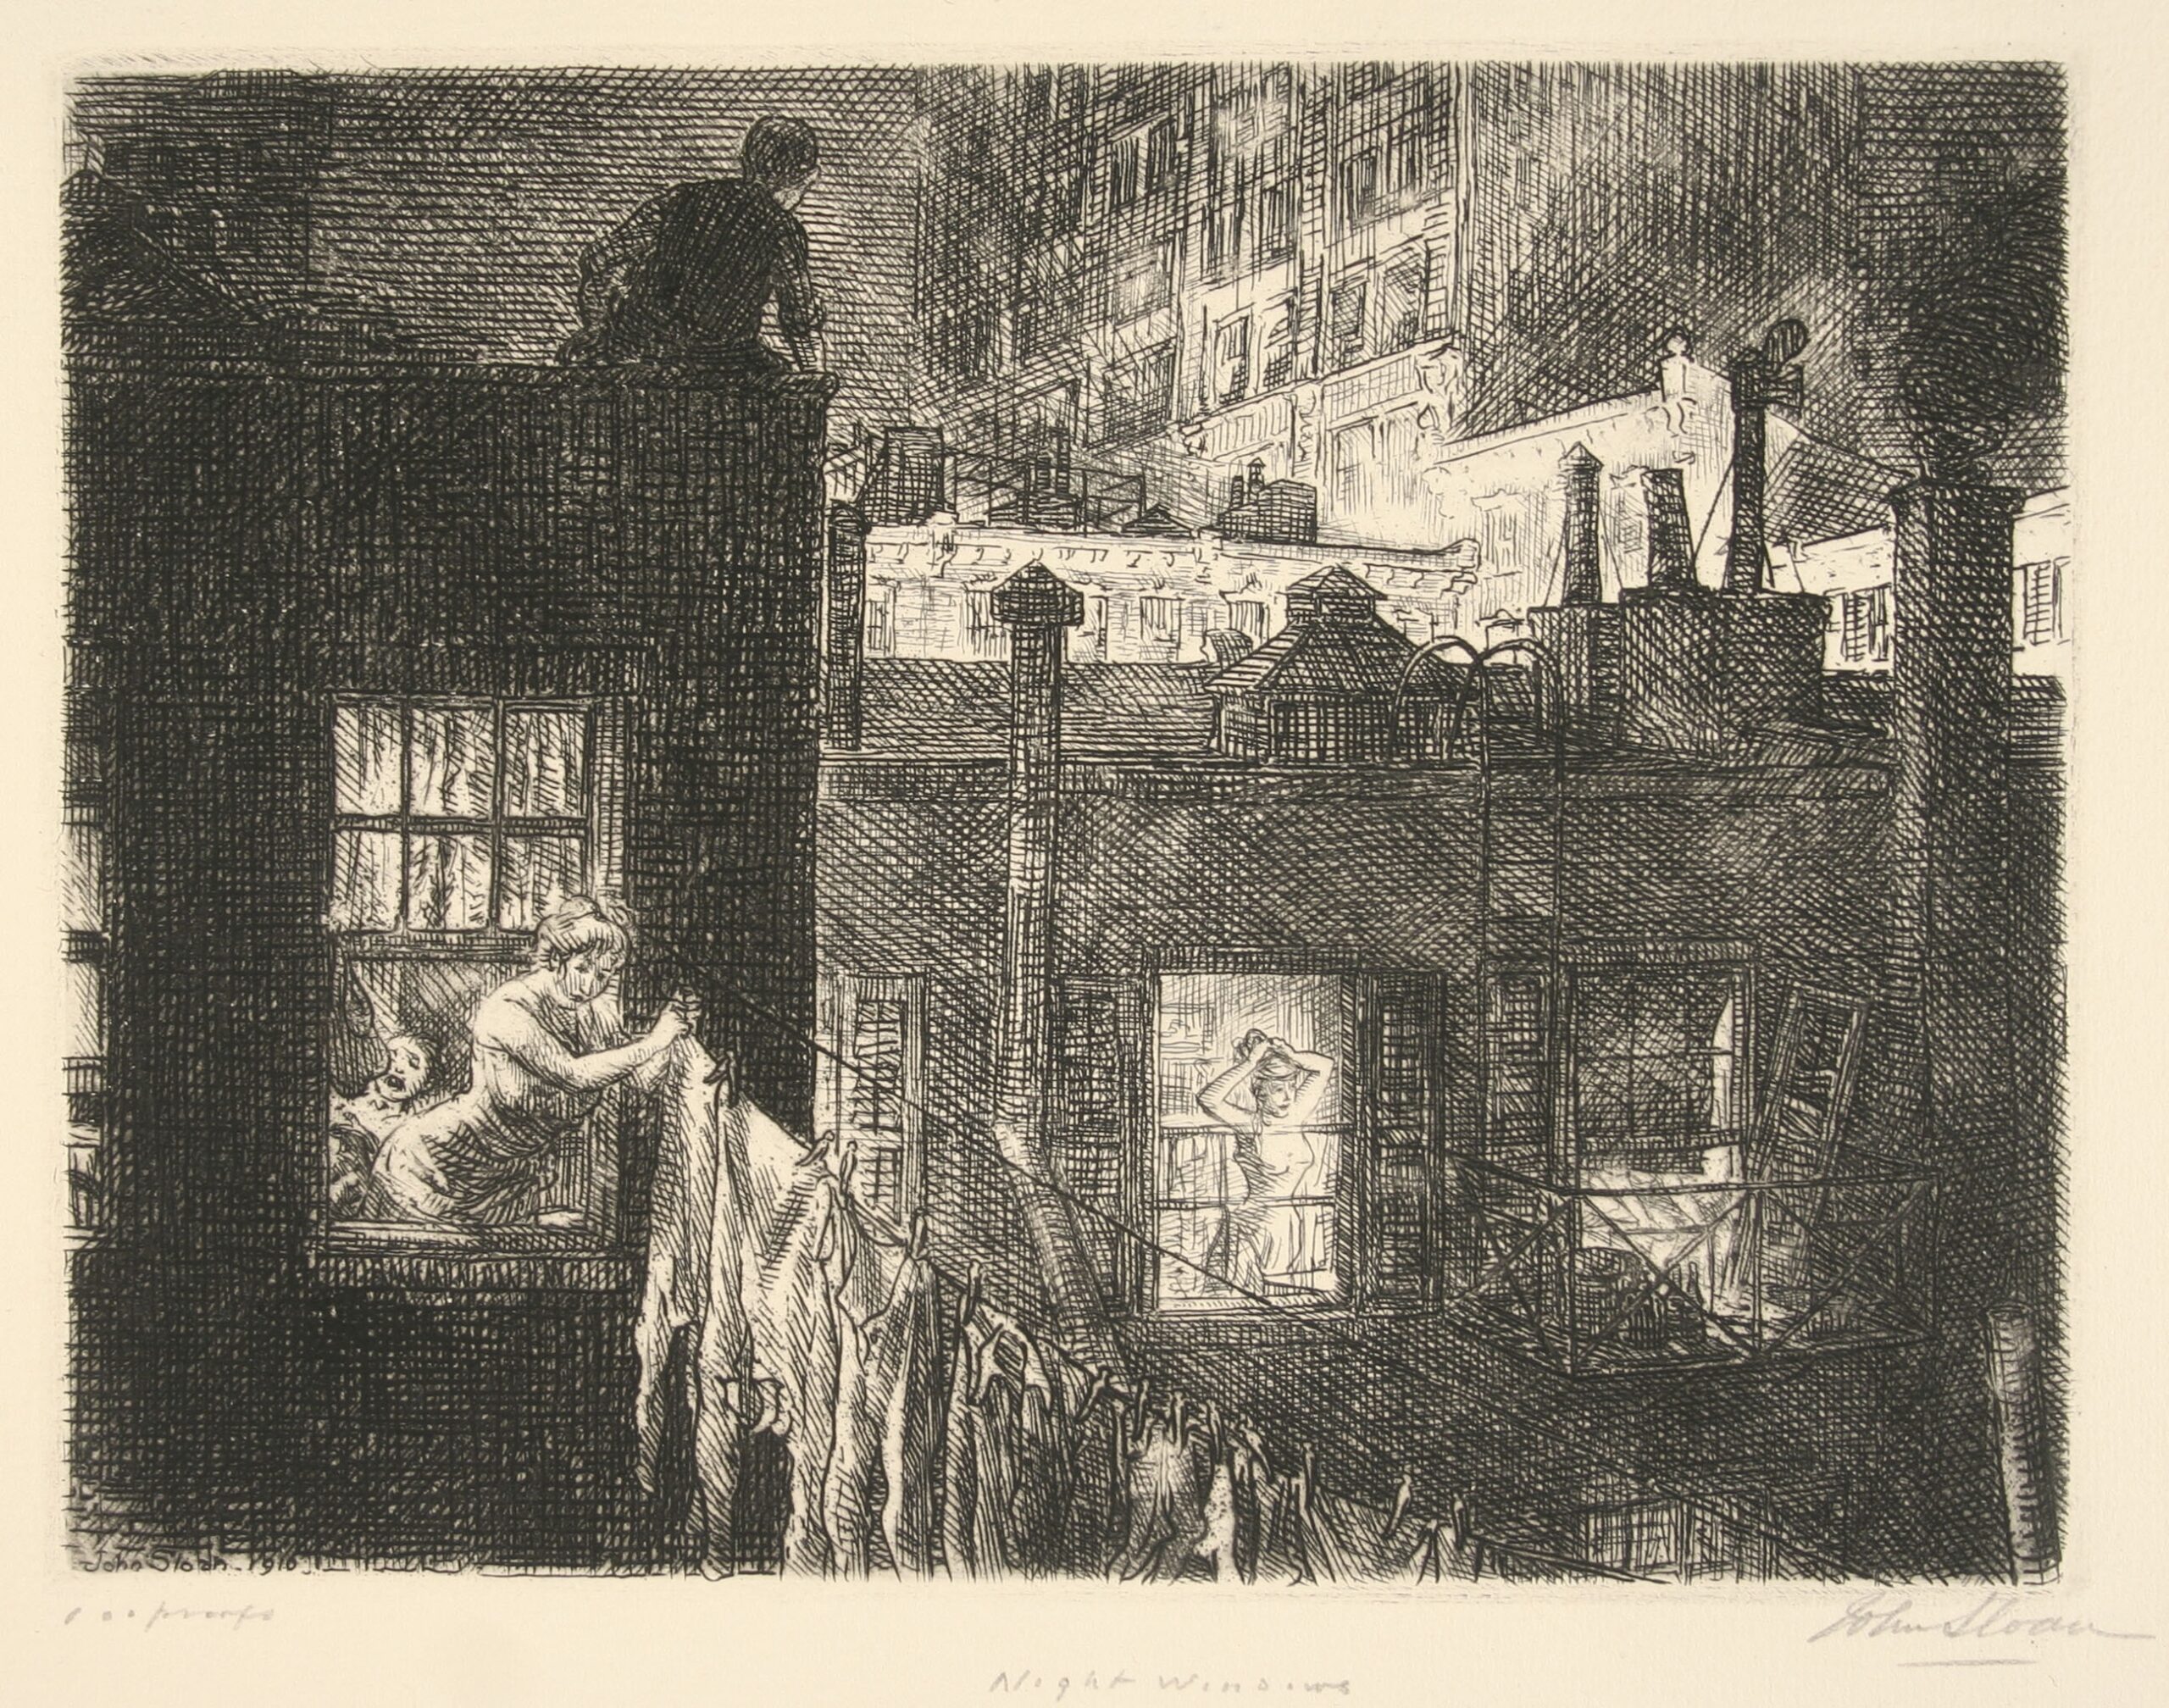 John Sloan (American, 1871-1951), Night Windows, 1910, etching. Museums Collections, Gift of Mrs. John Sloan